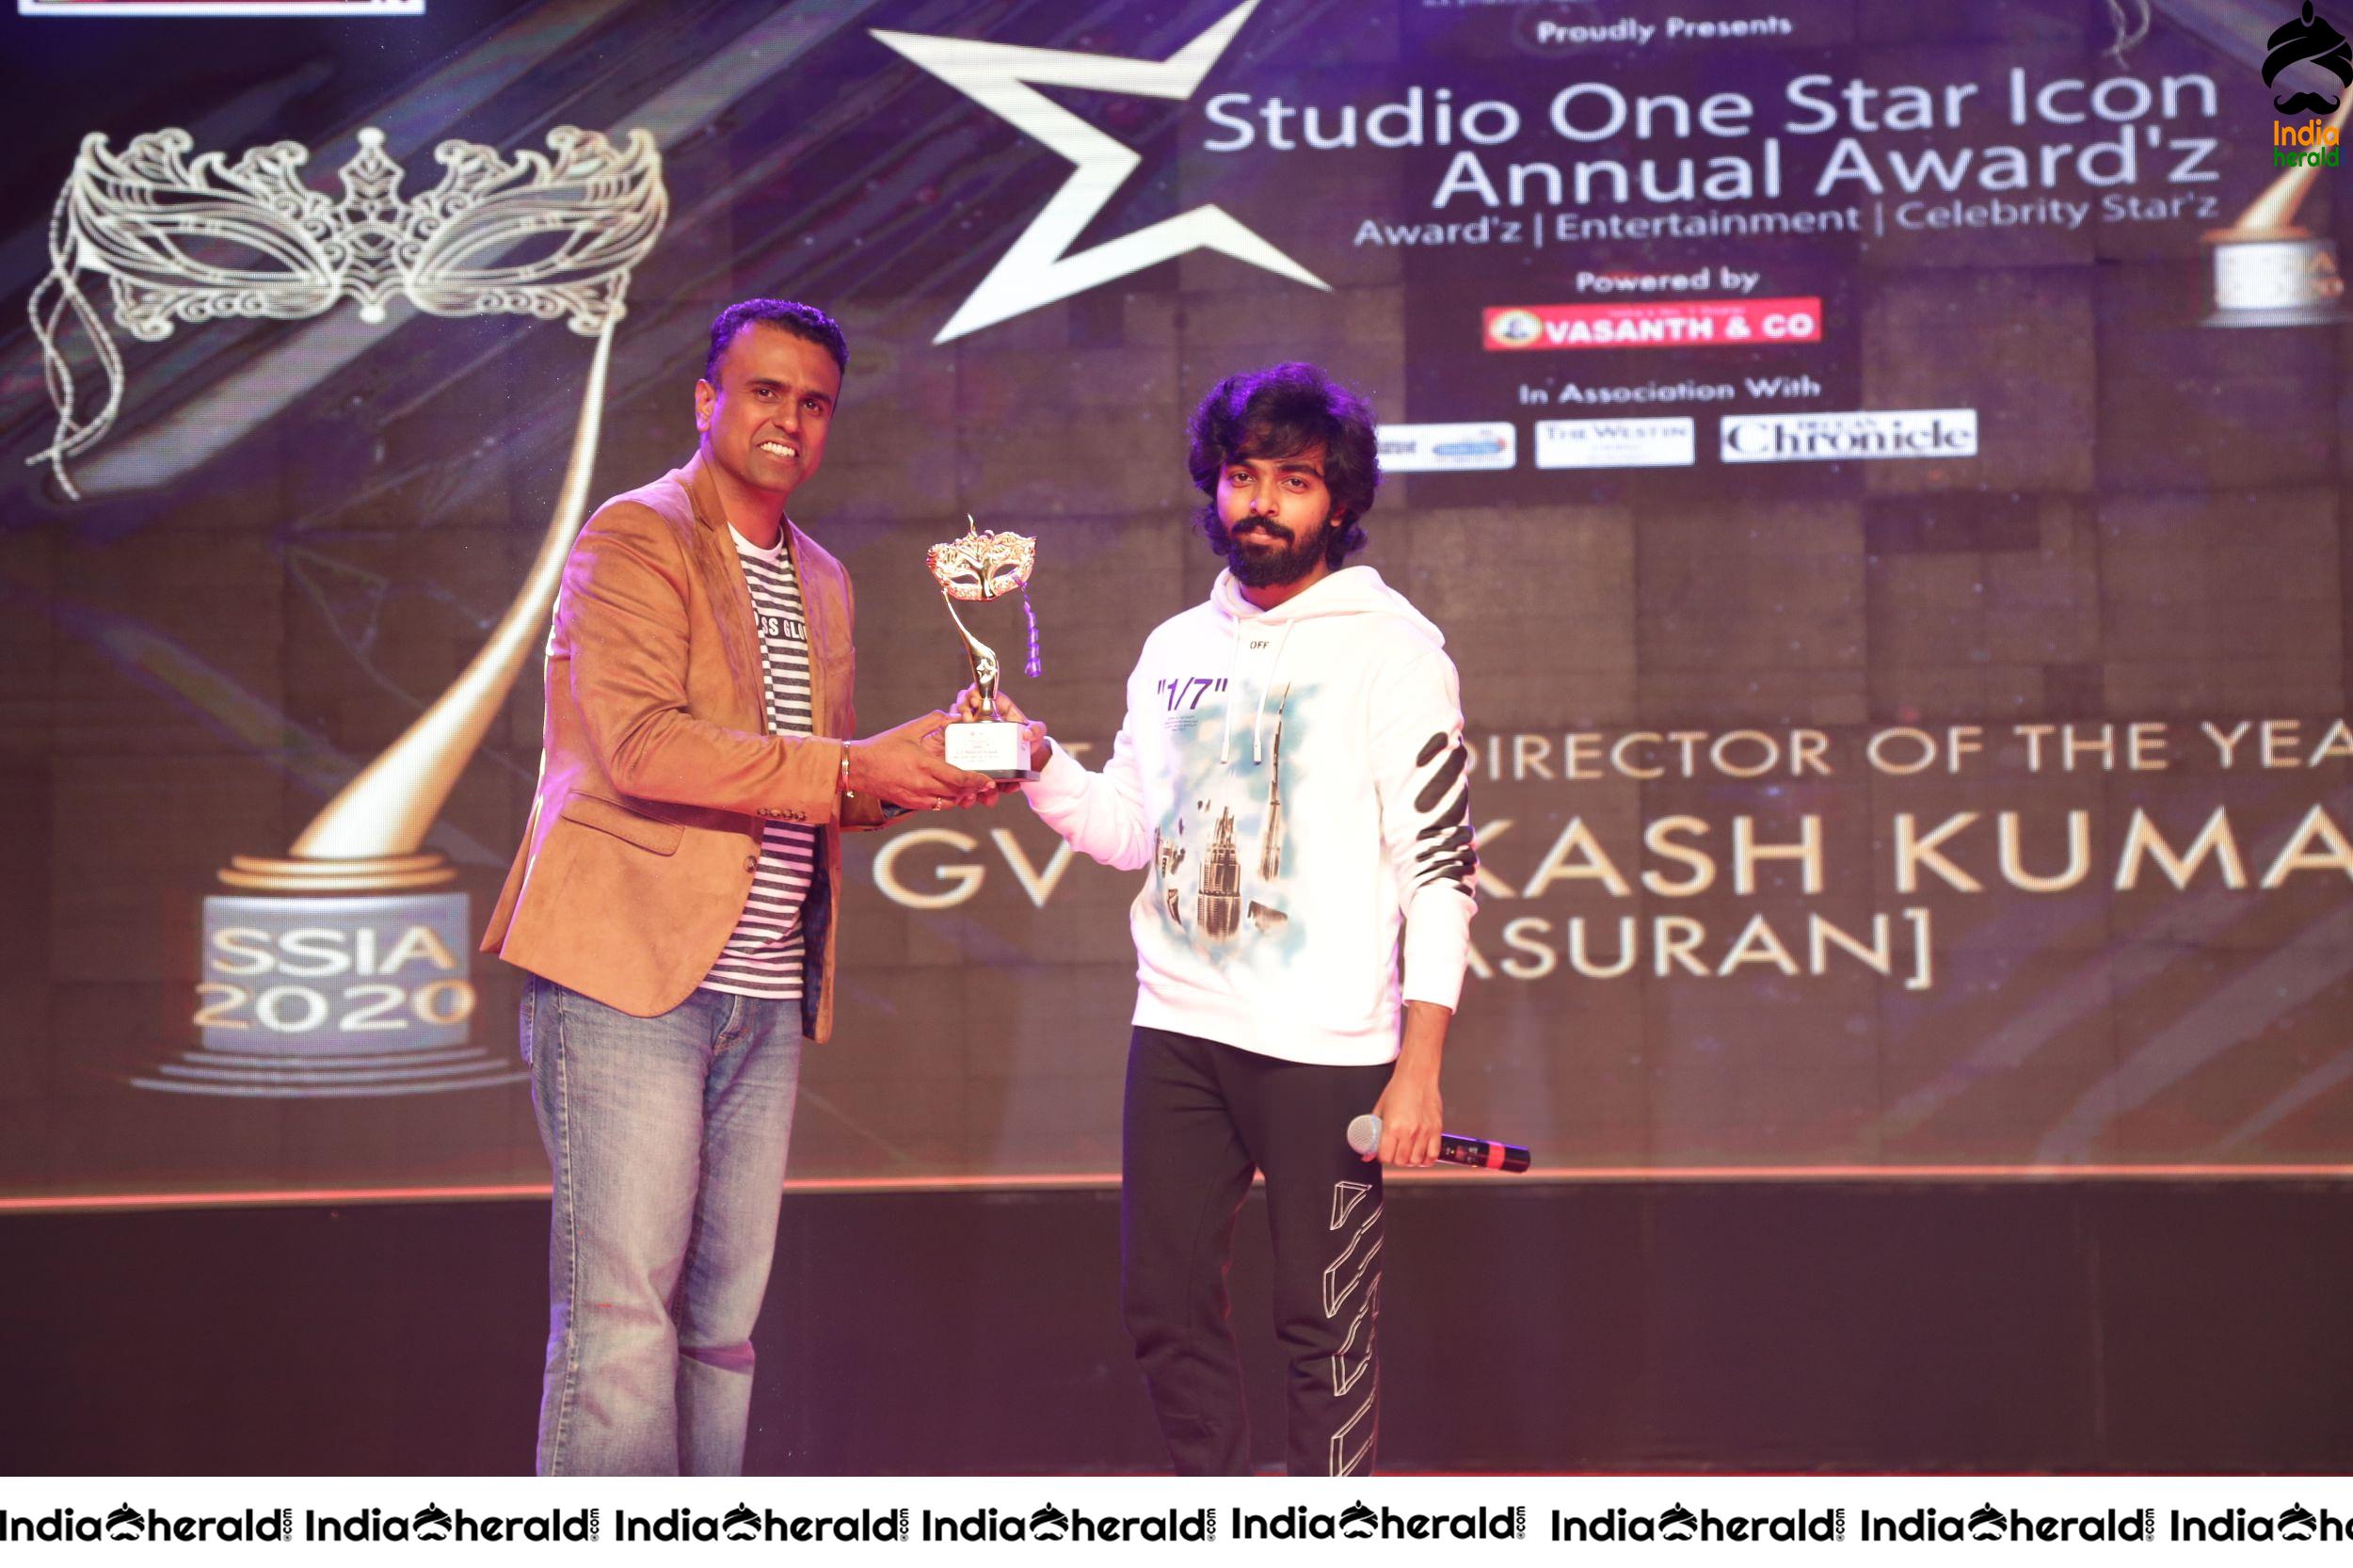 Studio One Star Icon Annual Award Event Stills Set 2